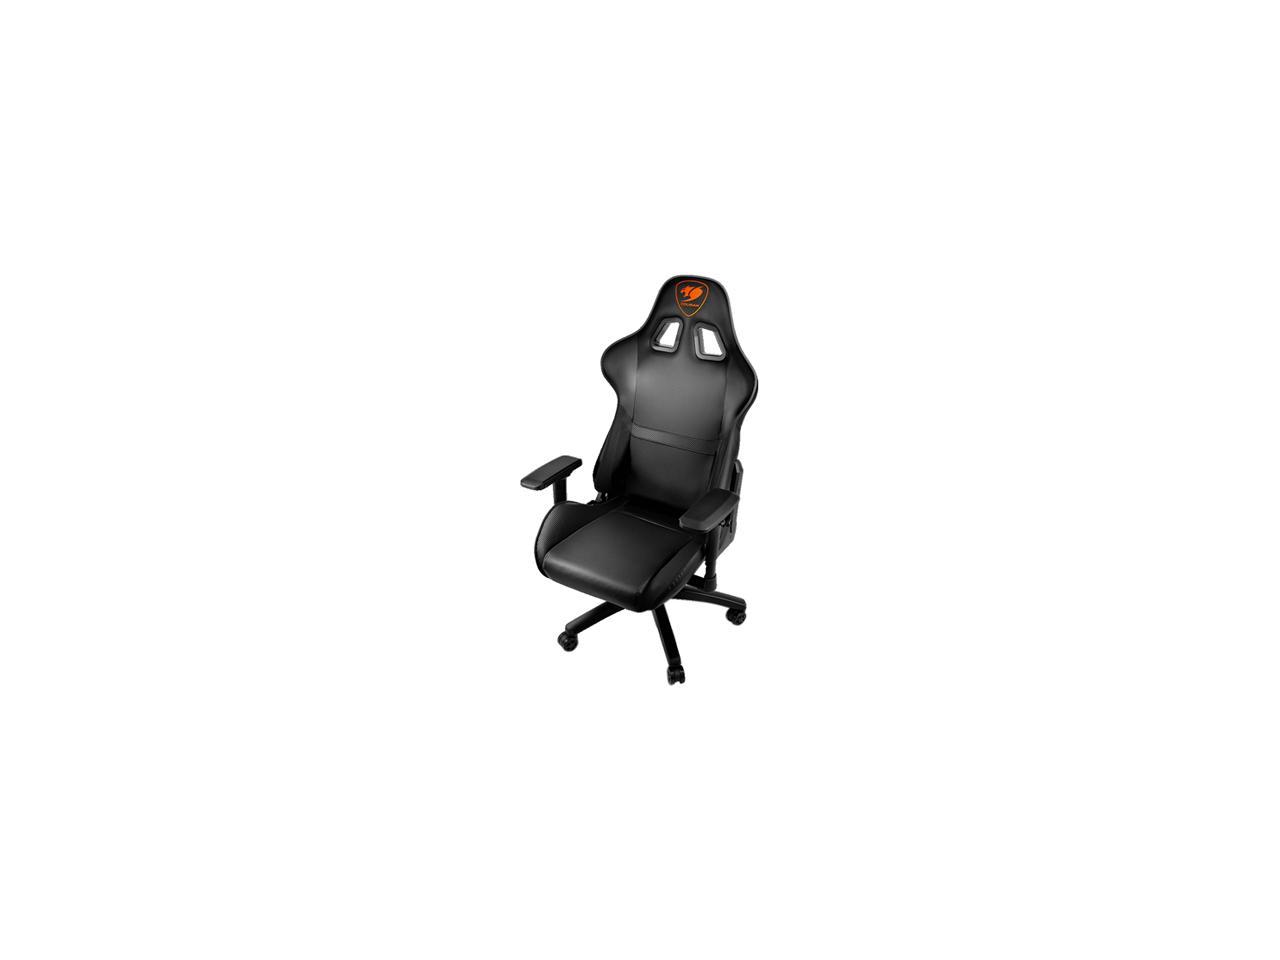 Cougar Armor Gaming Chair (Black)